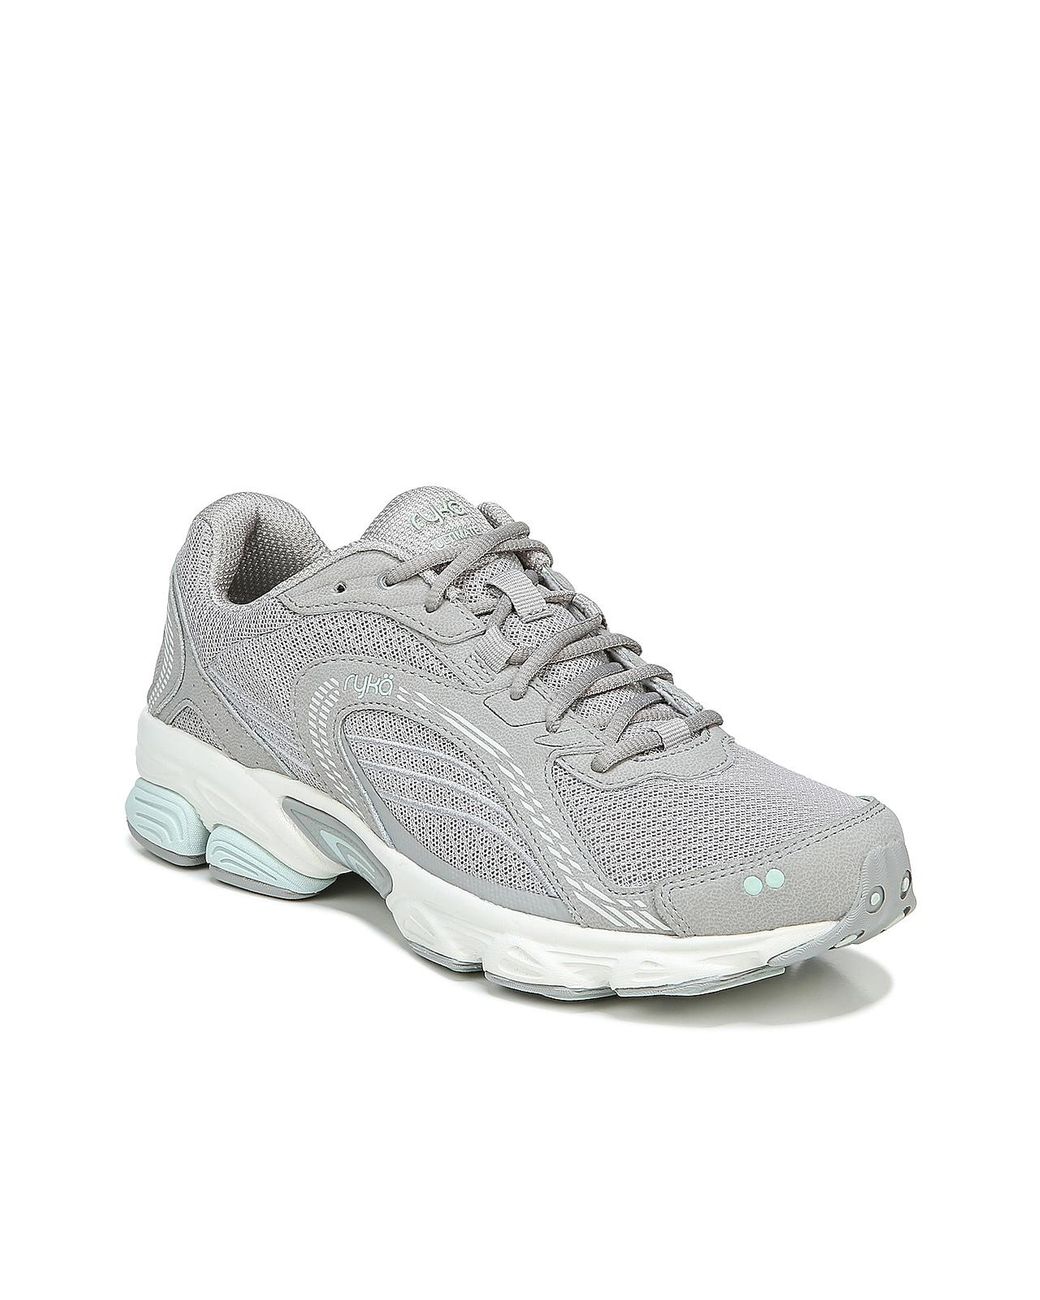 Ryka Leather Ultimate Running Walking Shoe in Grey (Gray) - Lyst